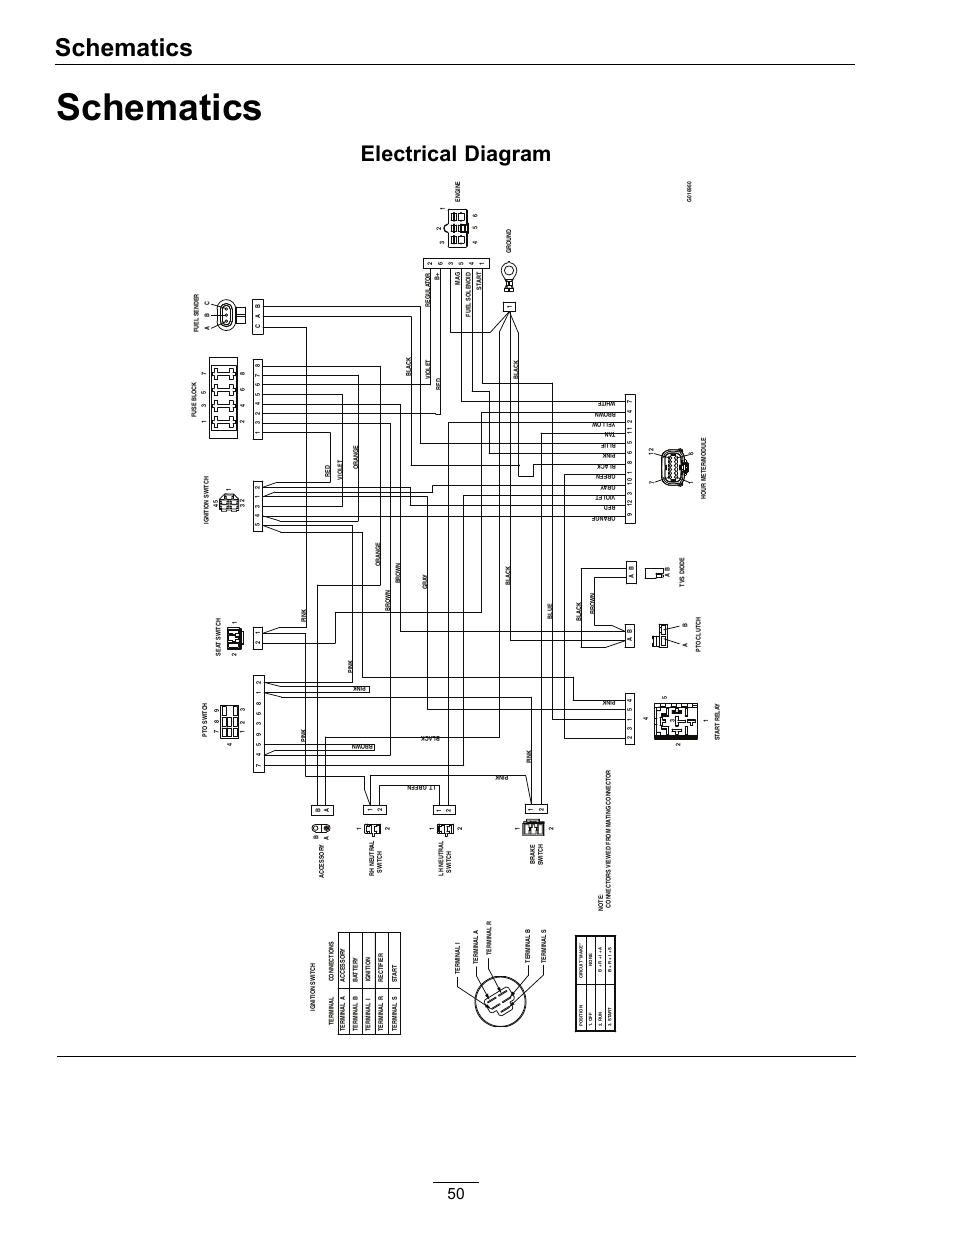 insinkerator wiring diagram